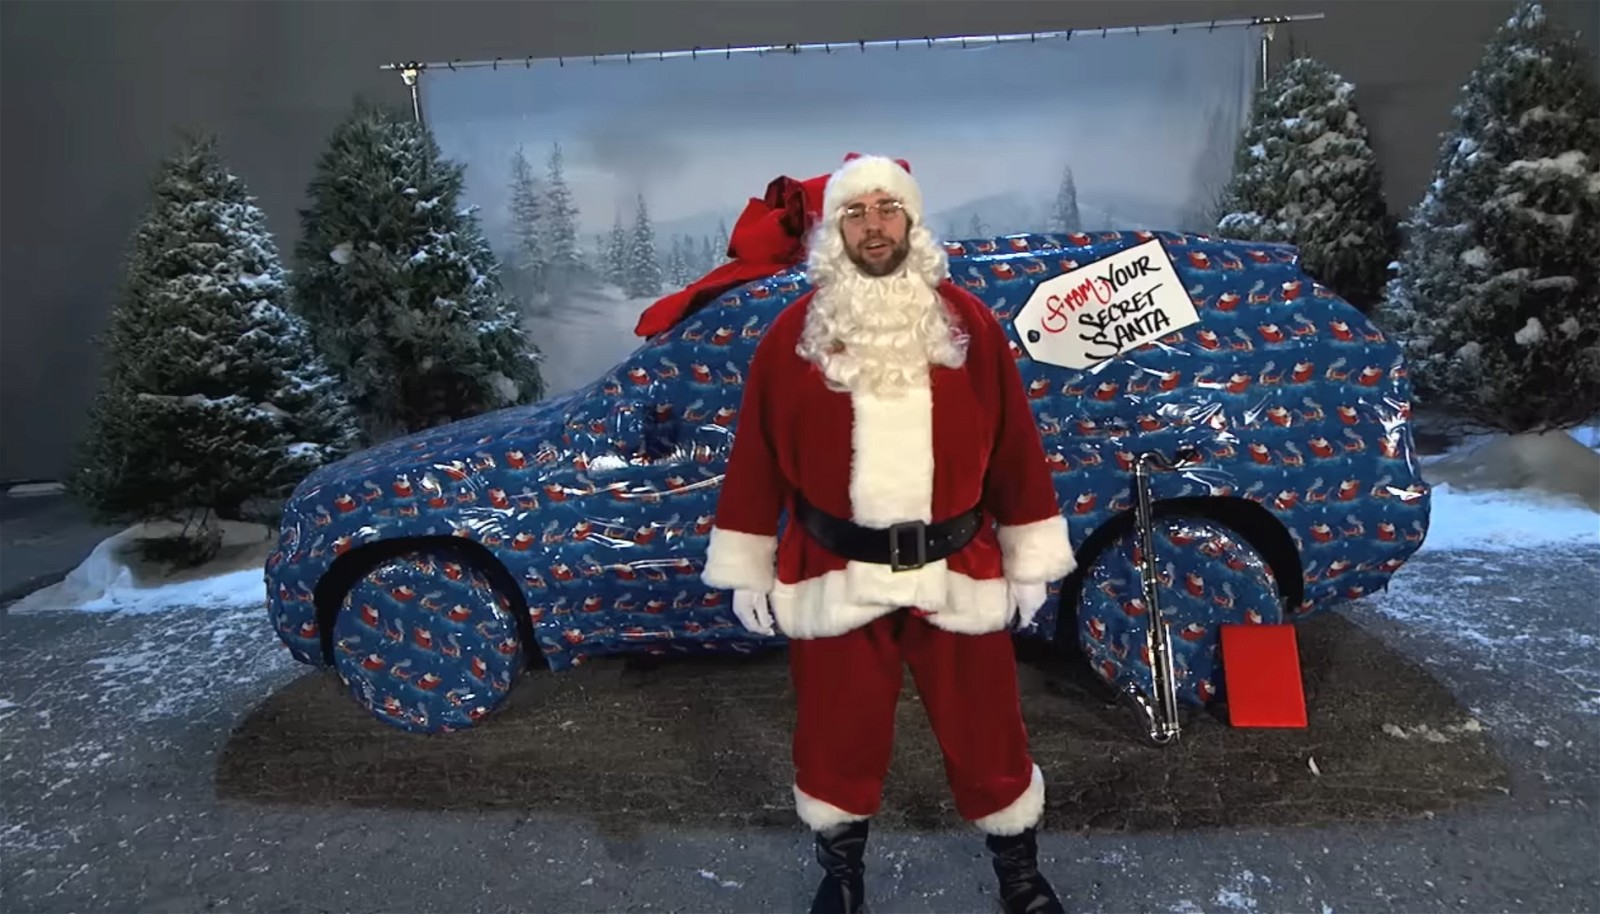 John Krasinski dressed up as Santa Claus to prank Jimmy Kimmel